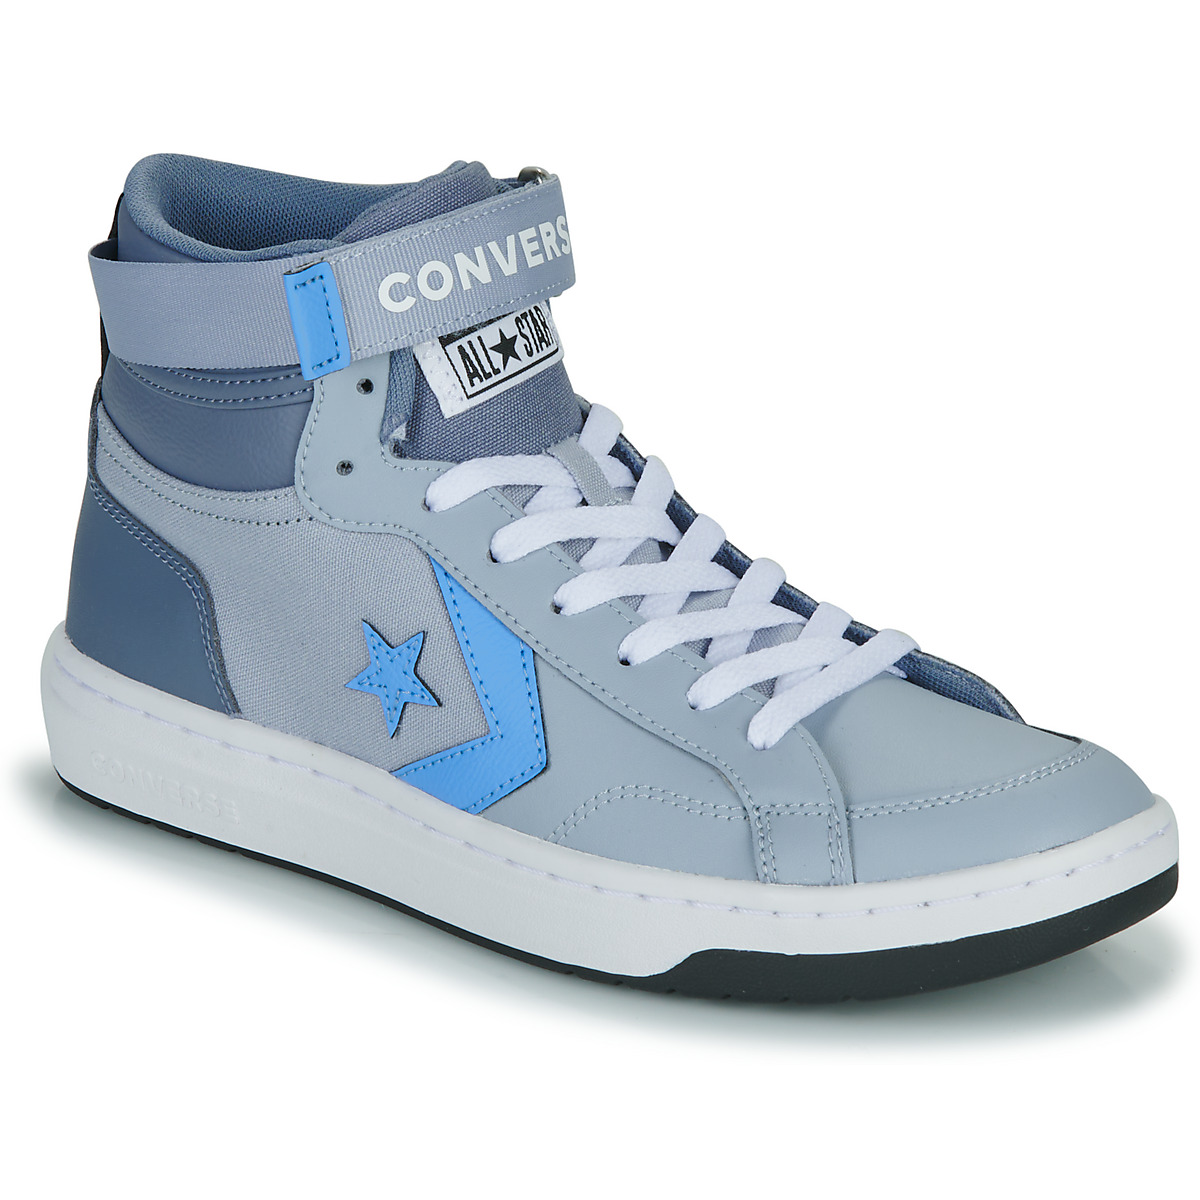 Schuhe Herren Sneaker High Converse PRO BLAZE V2 FALL TONE Grau / Blau